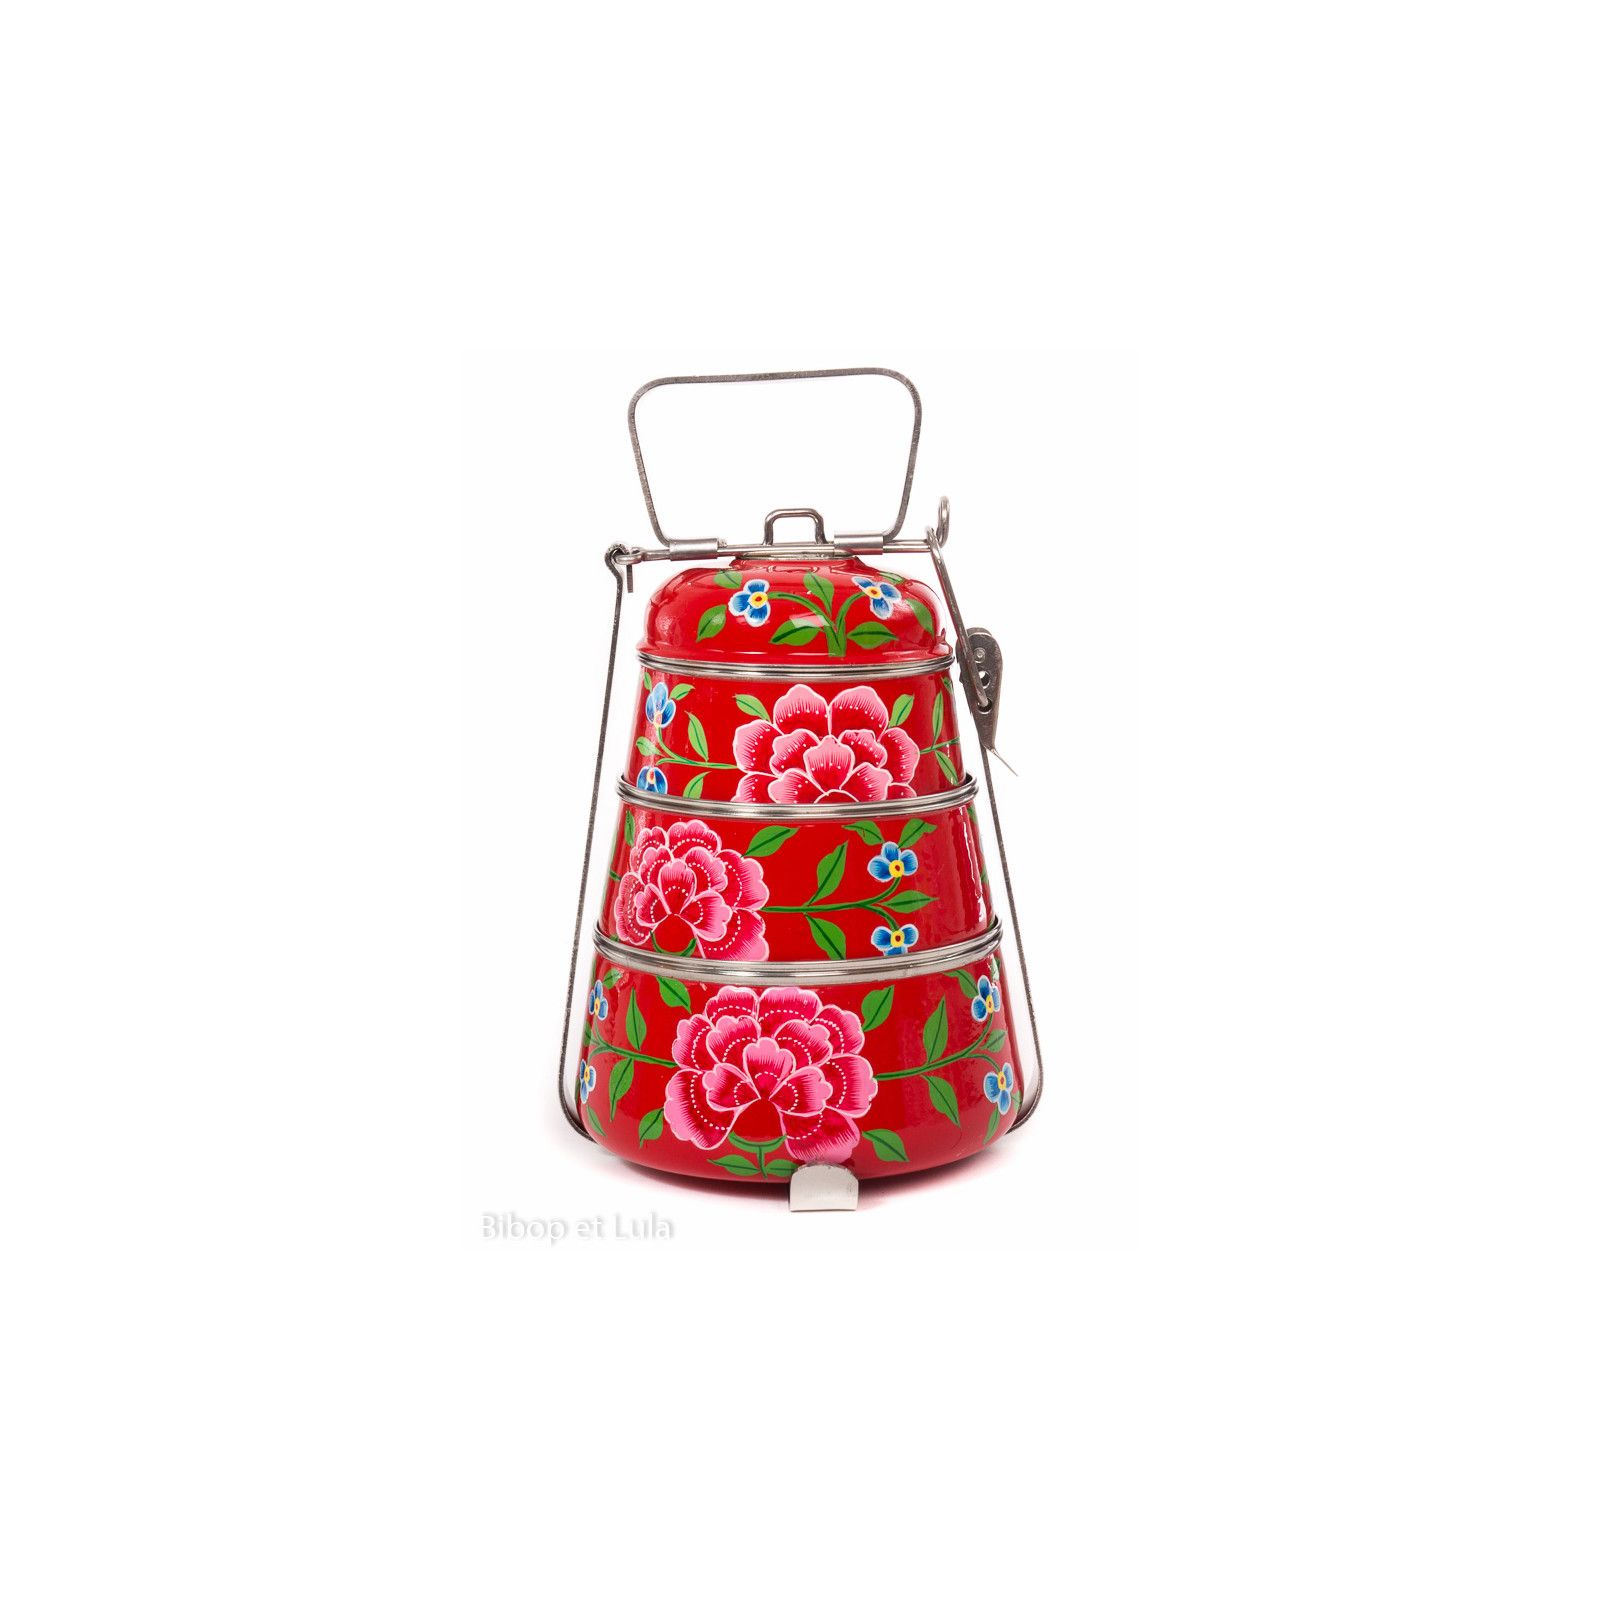 Lunch box inox peinte à la main Edira rouge - Bibop et Lula